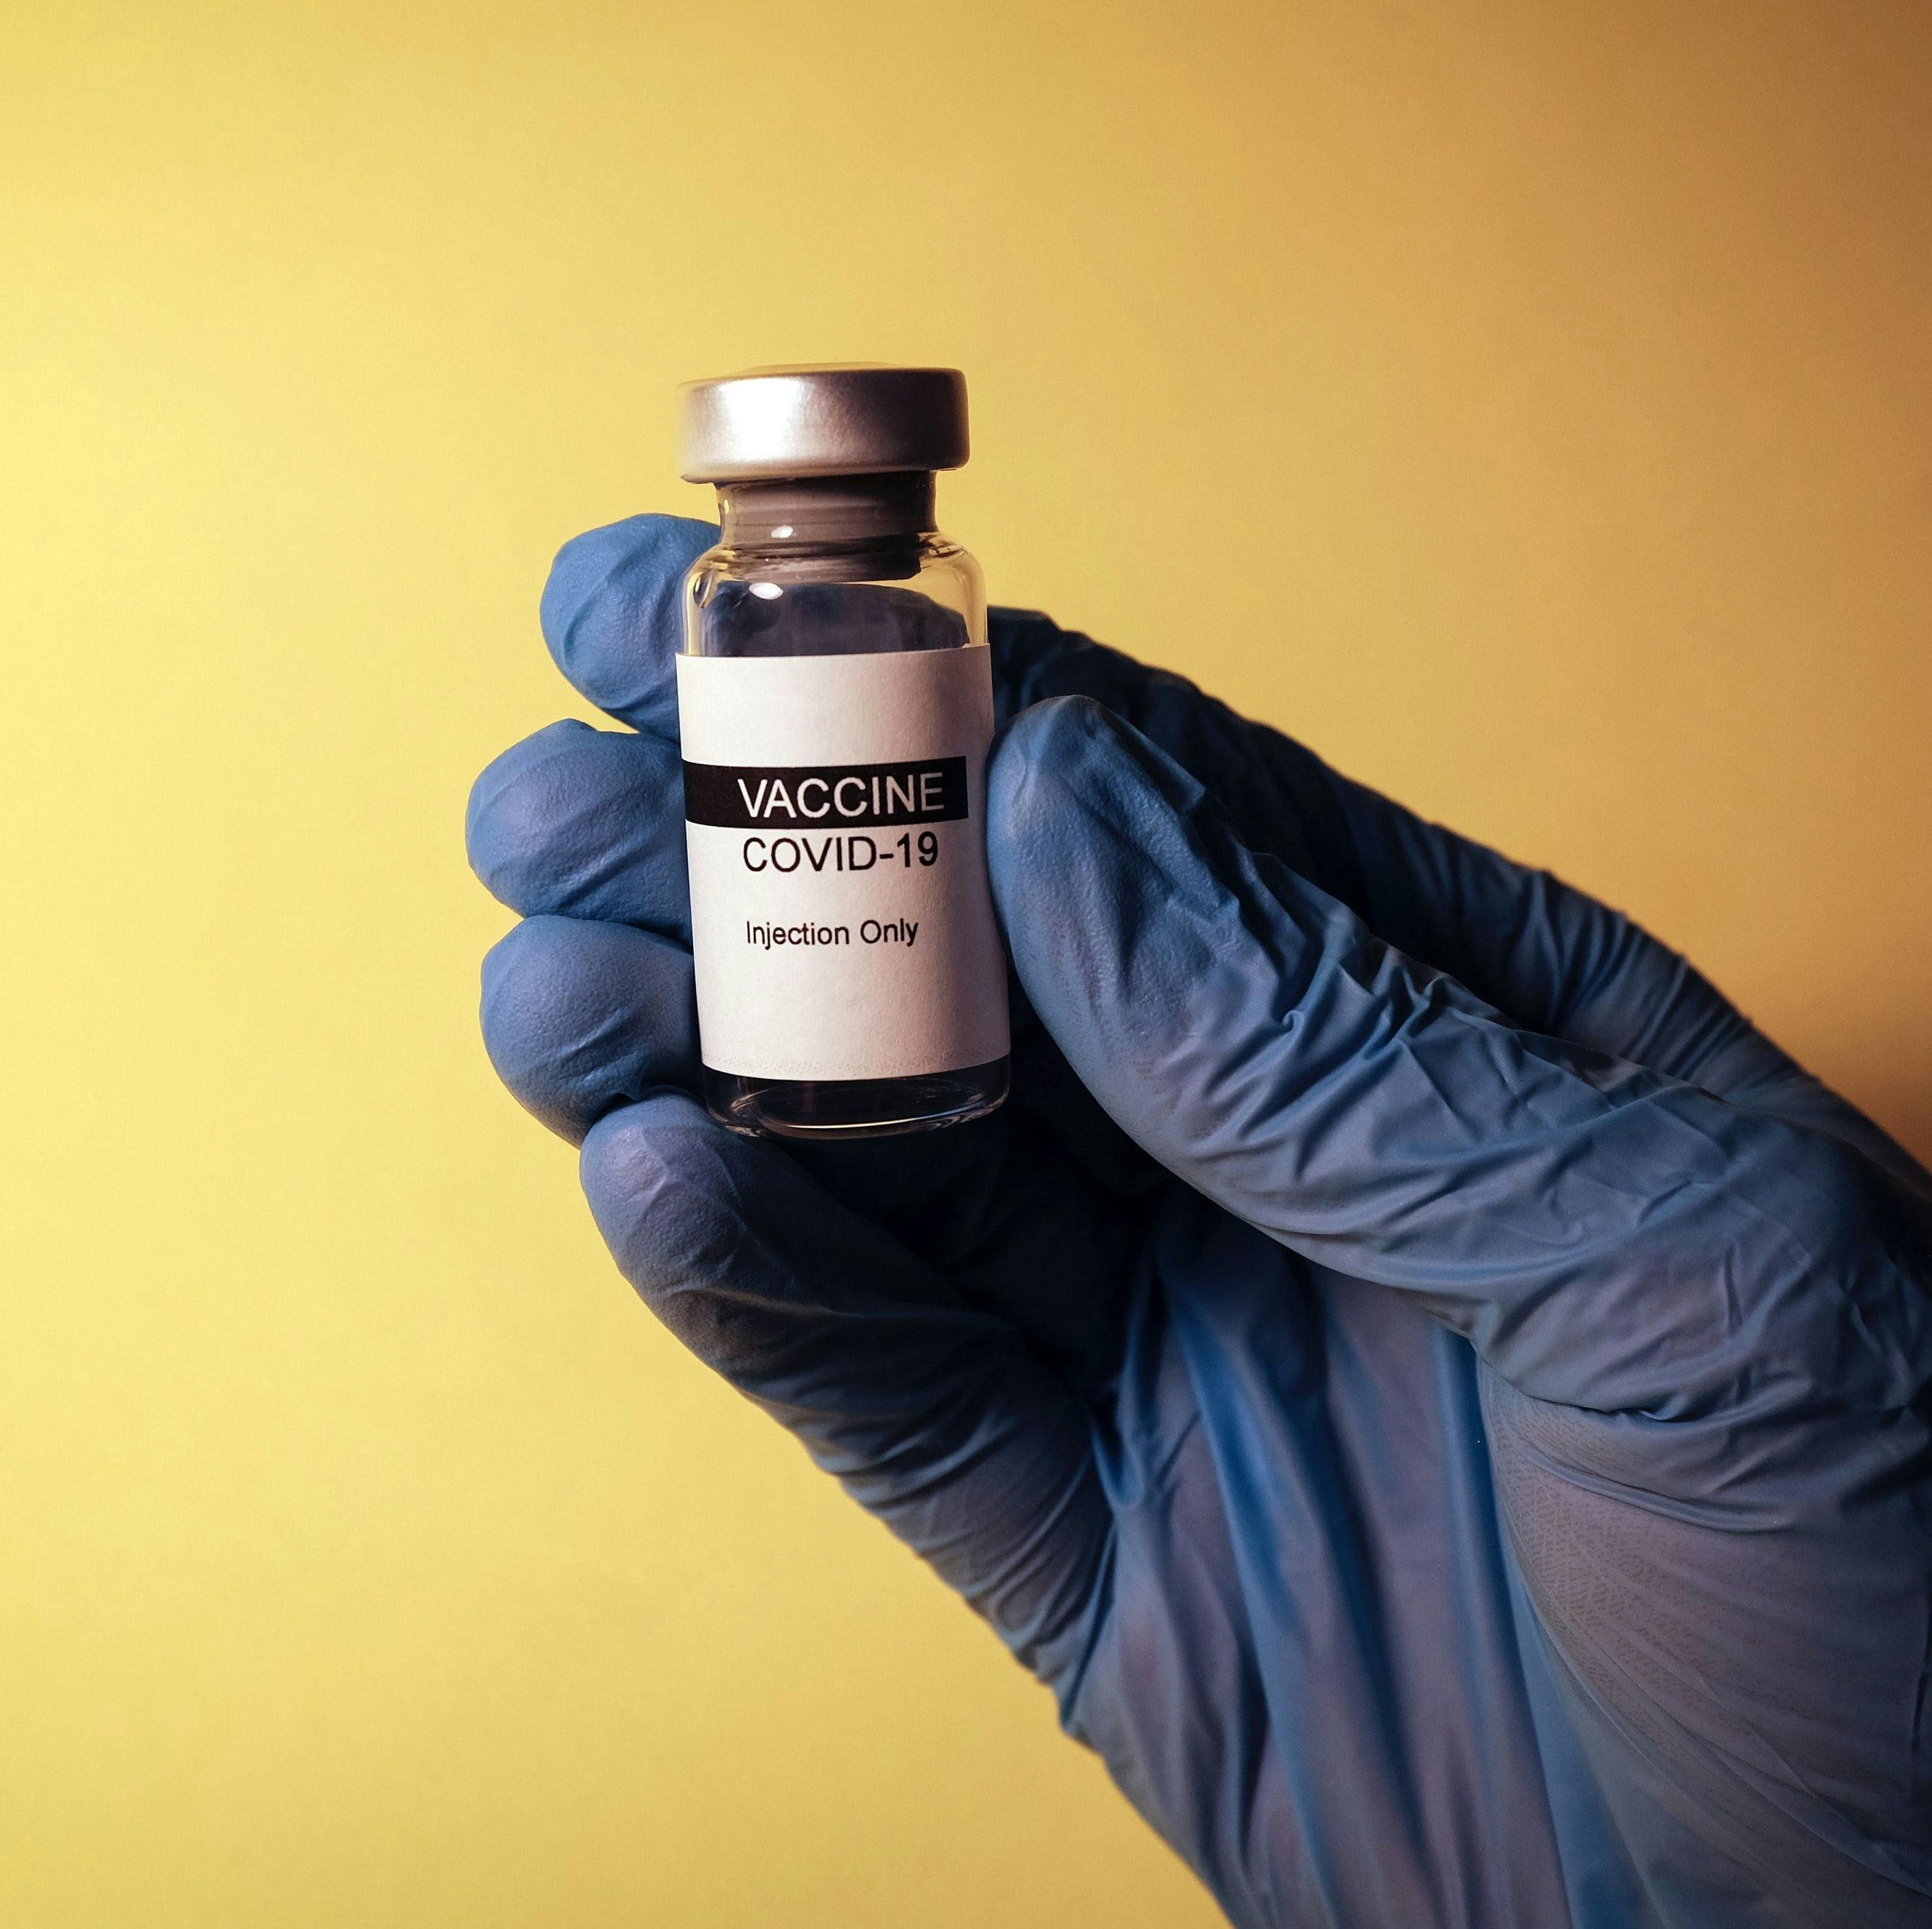 India Announces Centralized COVID-19 Vaccination Drive